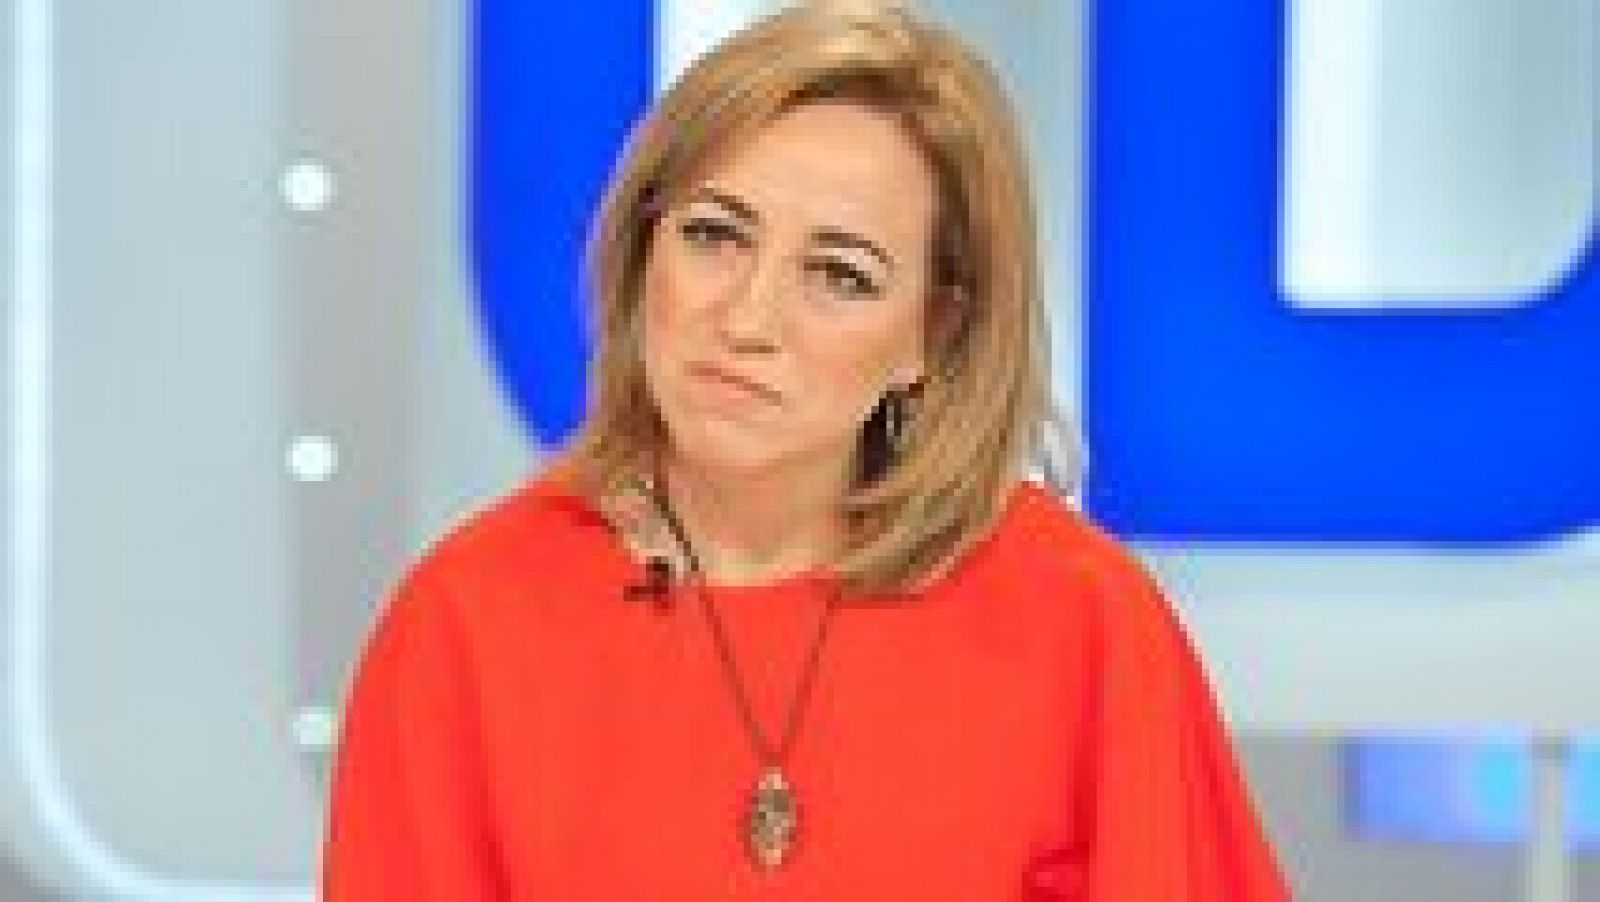 Telediario 1: Telediario - 8 horas - 10/04/17 | RTVE Play